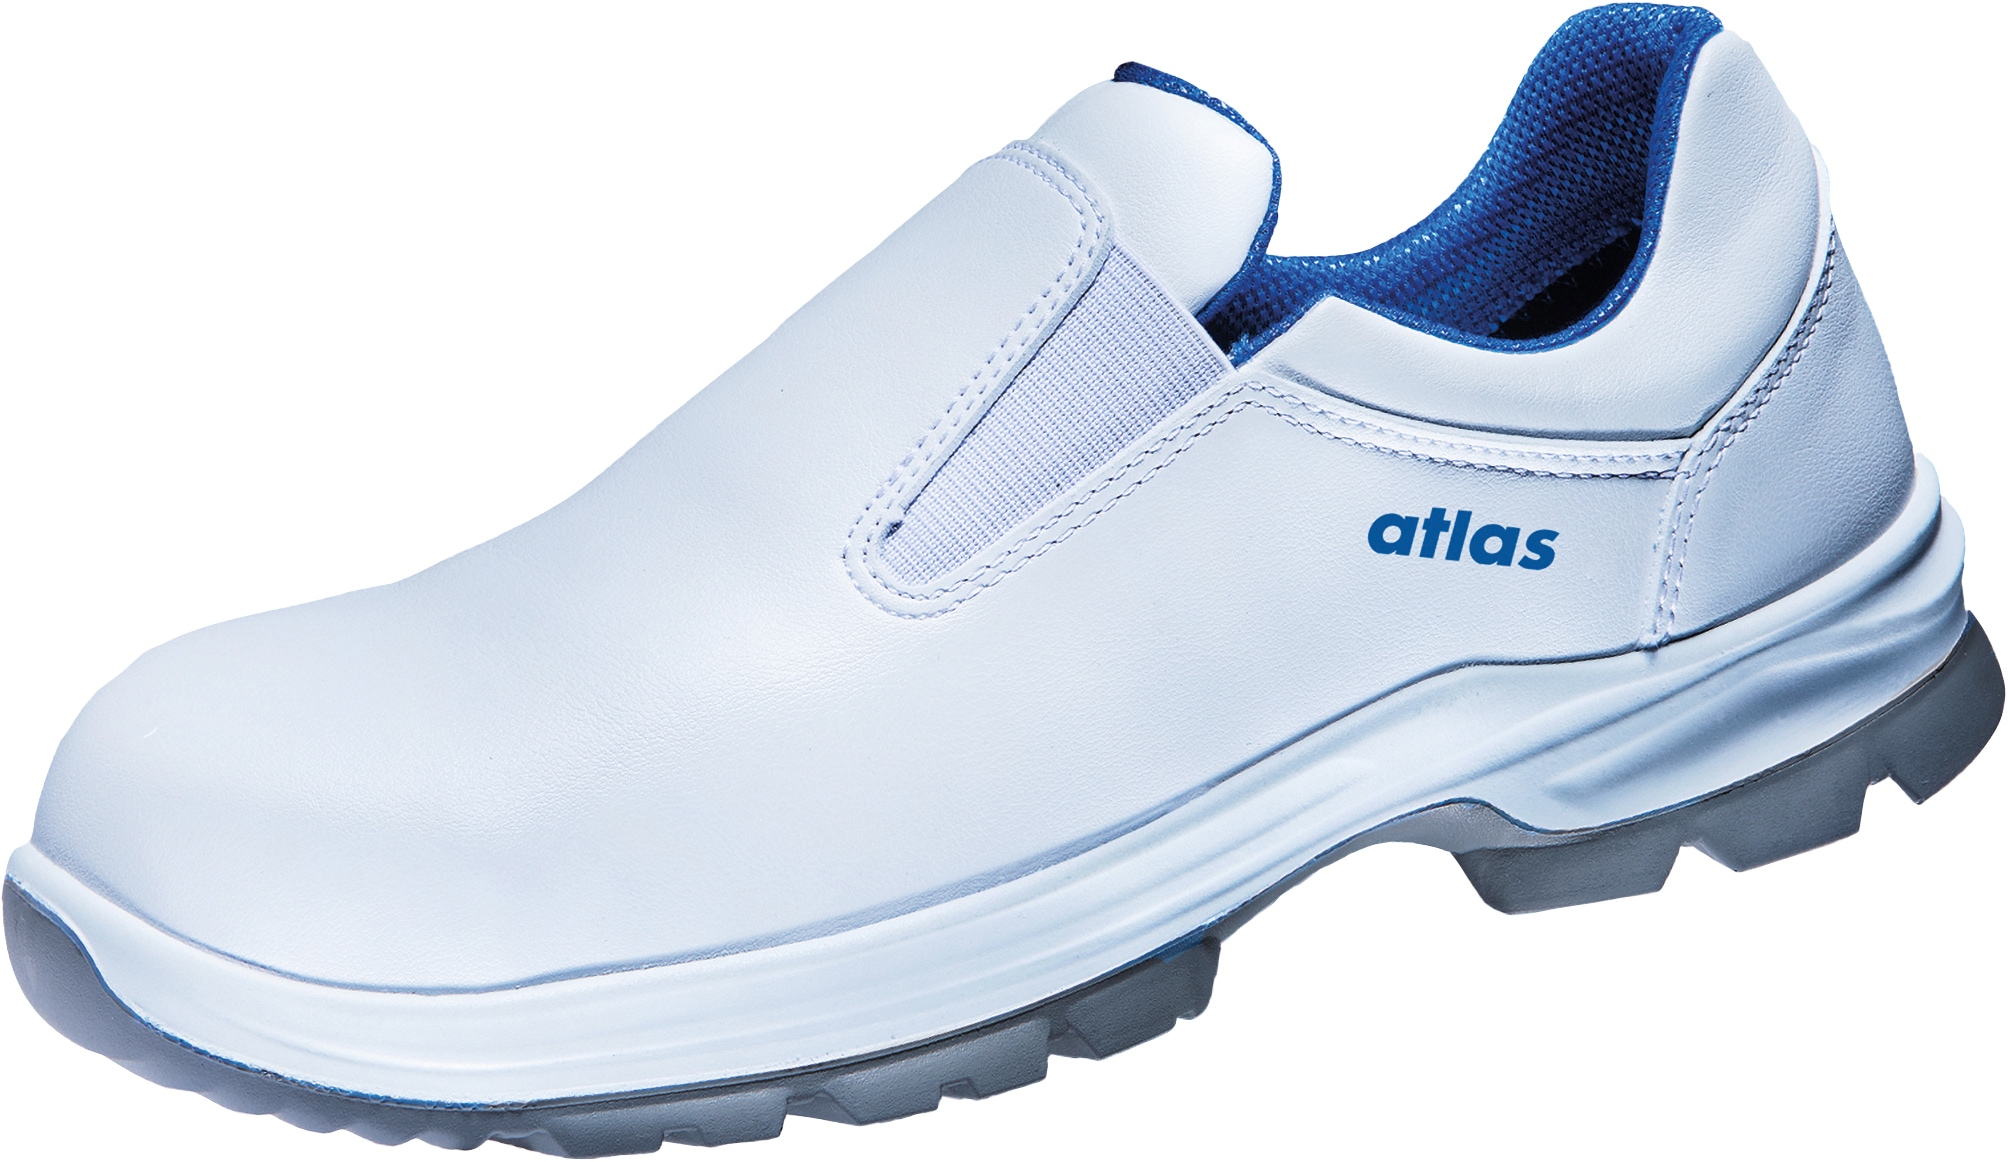 Atlas Schuhe Arbeitsschuh »Sneaker CL 490 2.0 ESD«, S2 jetzt bestellen